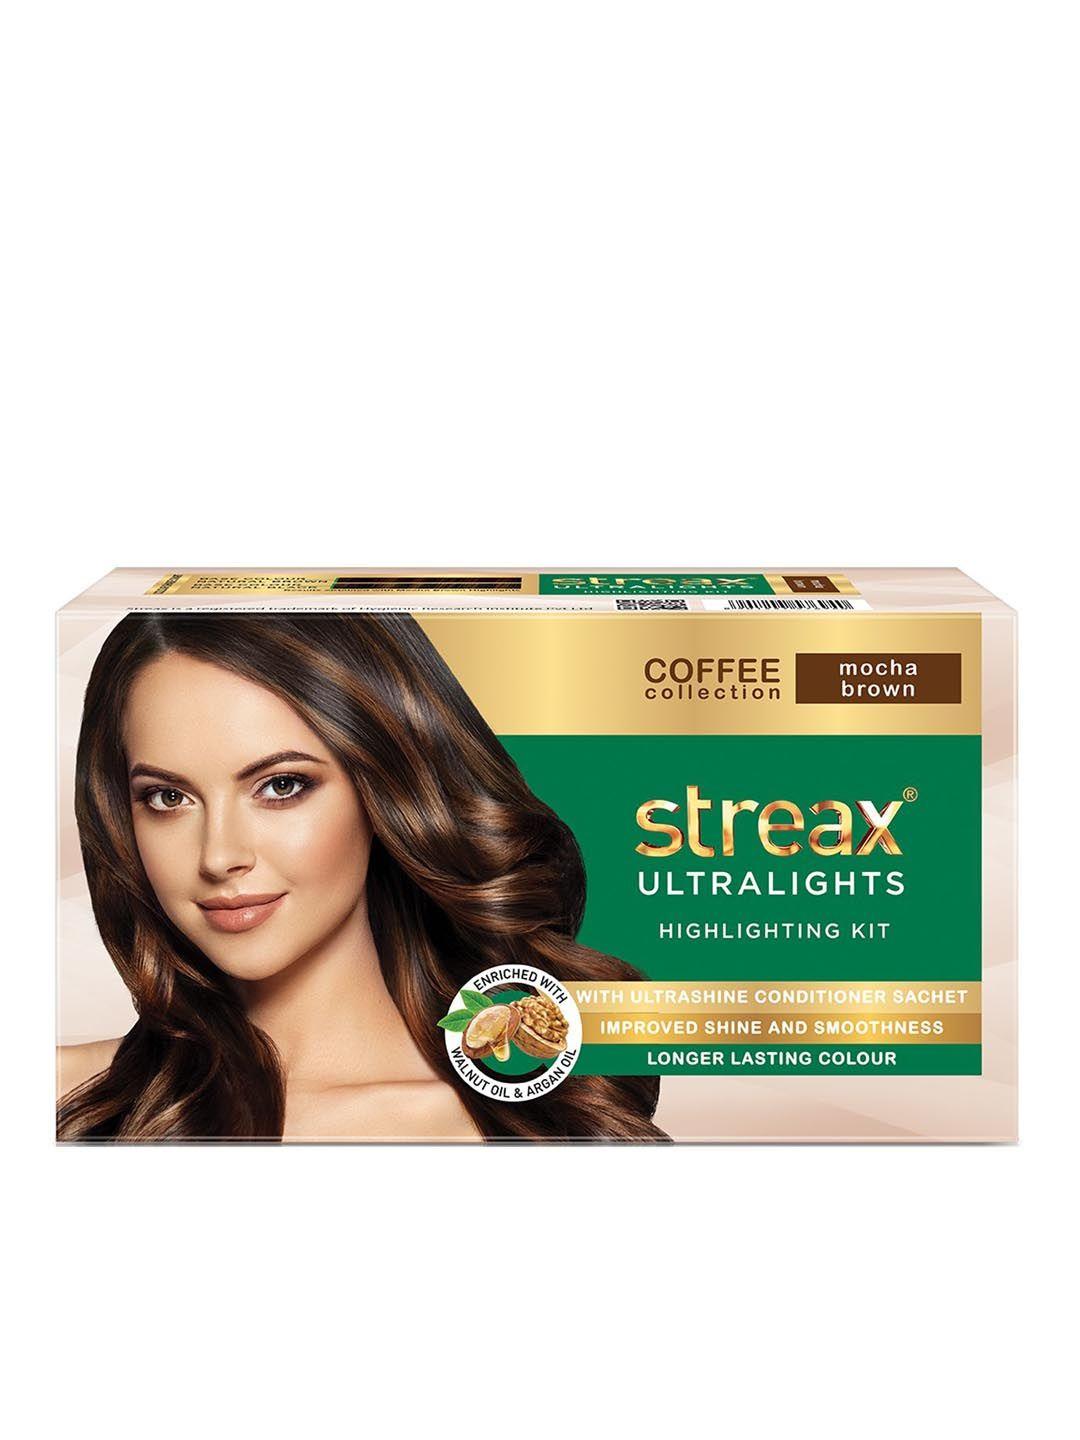 streax coffee collection ultralights highlighting kit - mocha brown 50 ml